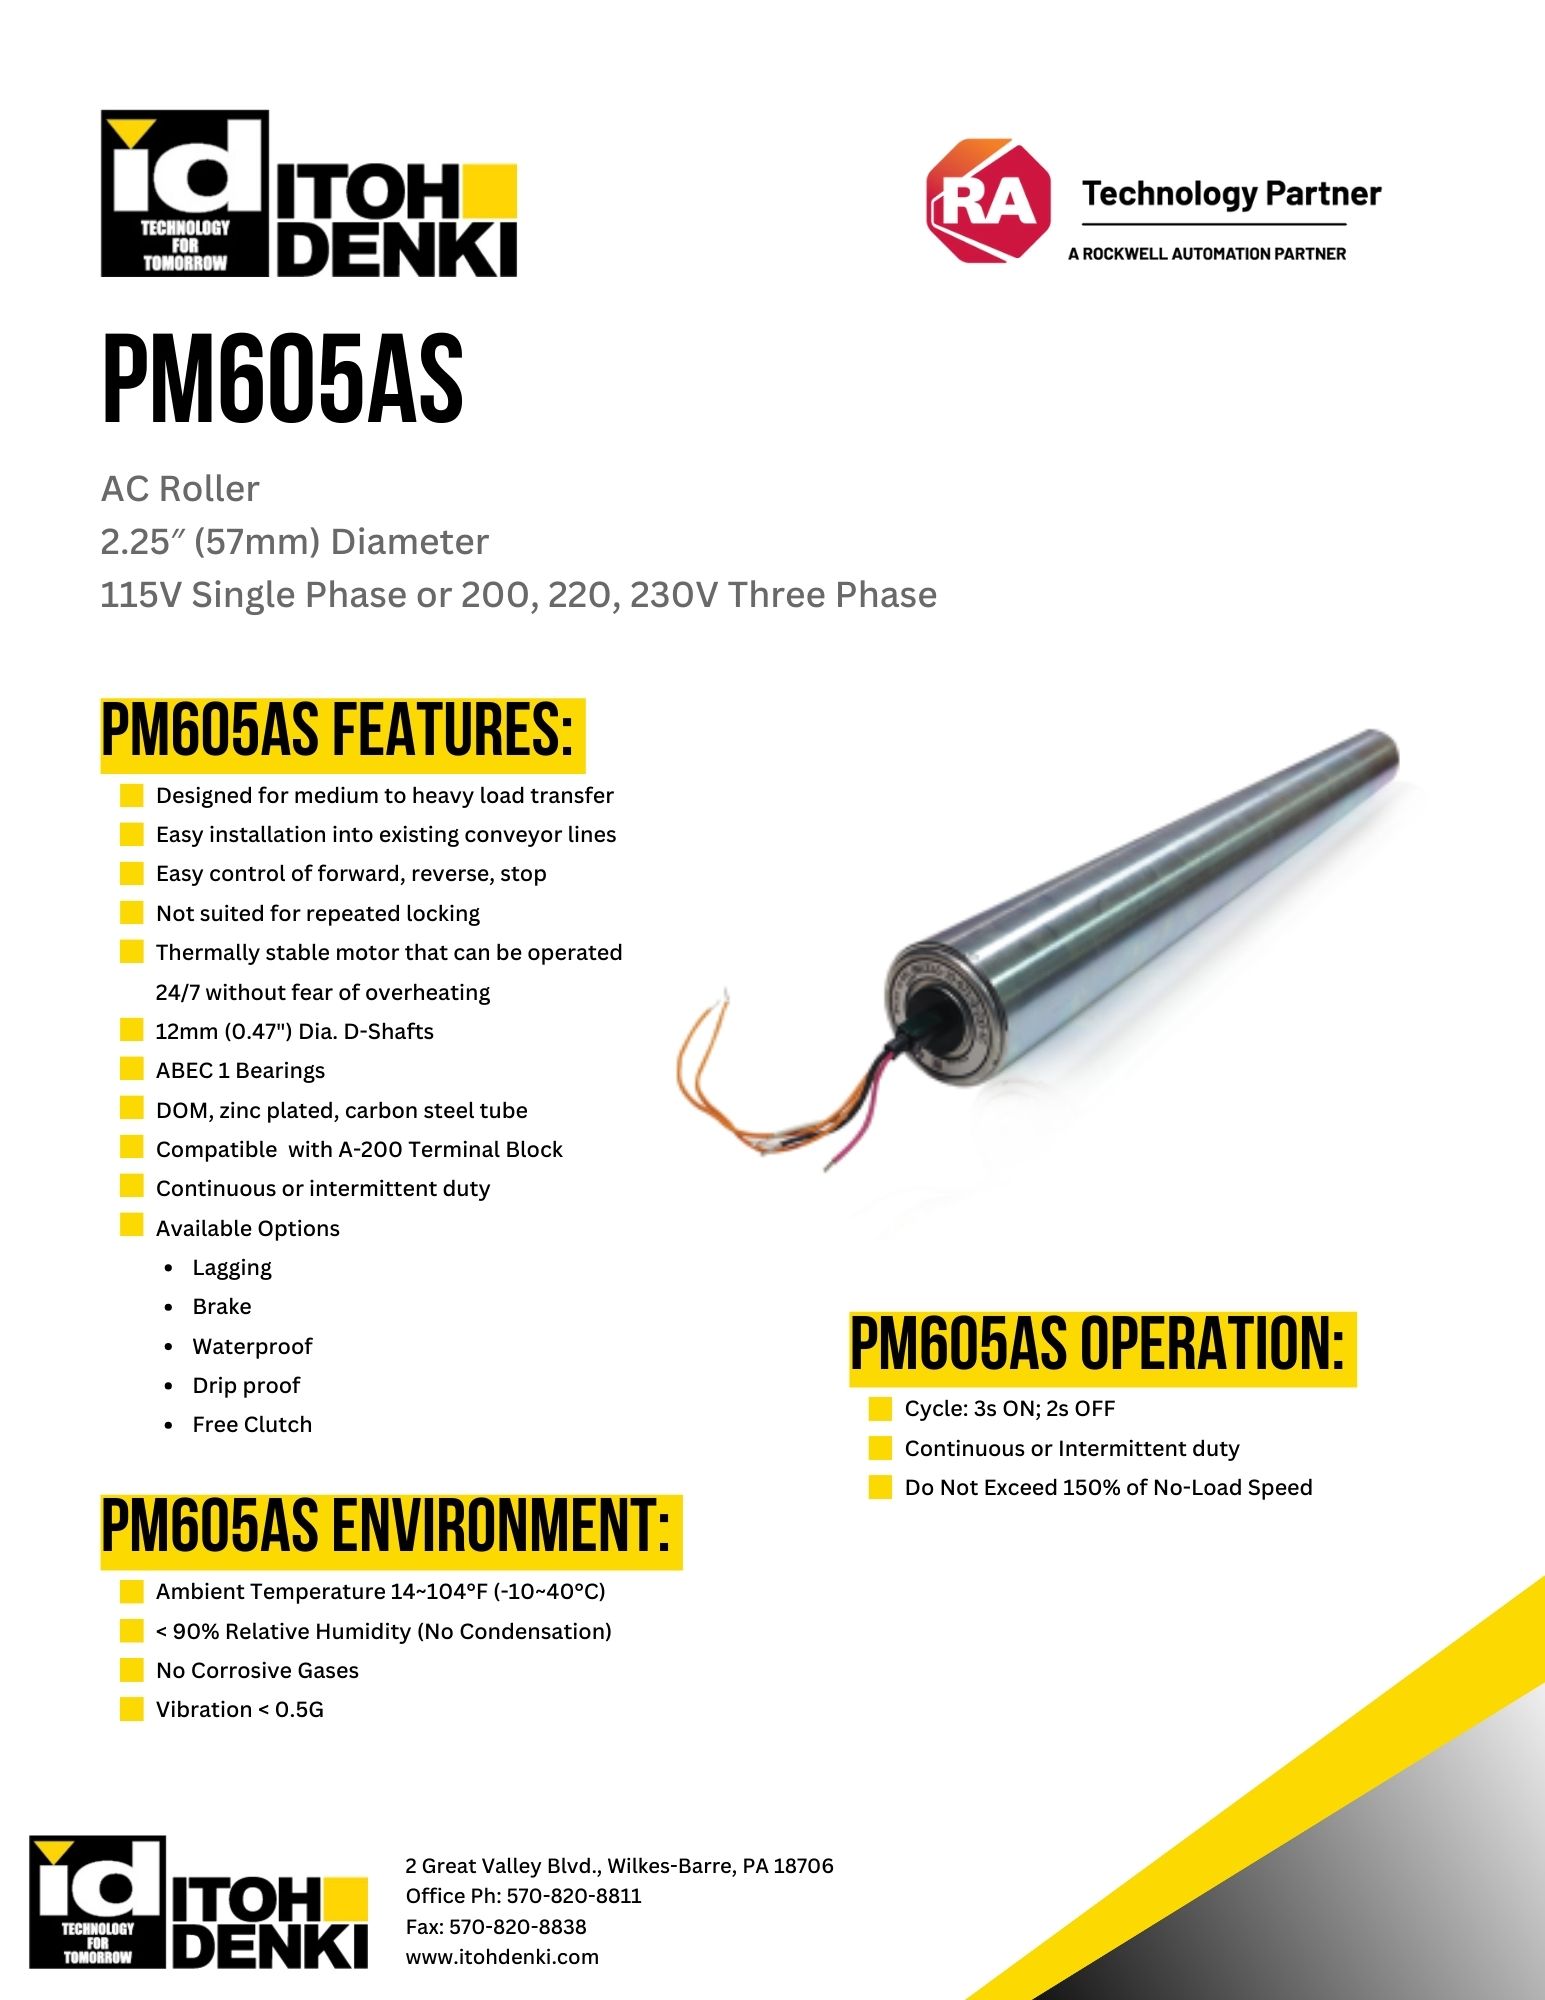 Itoh Denki PM605AS AC roller product sheet